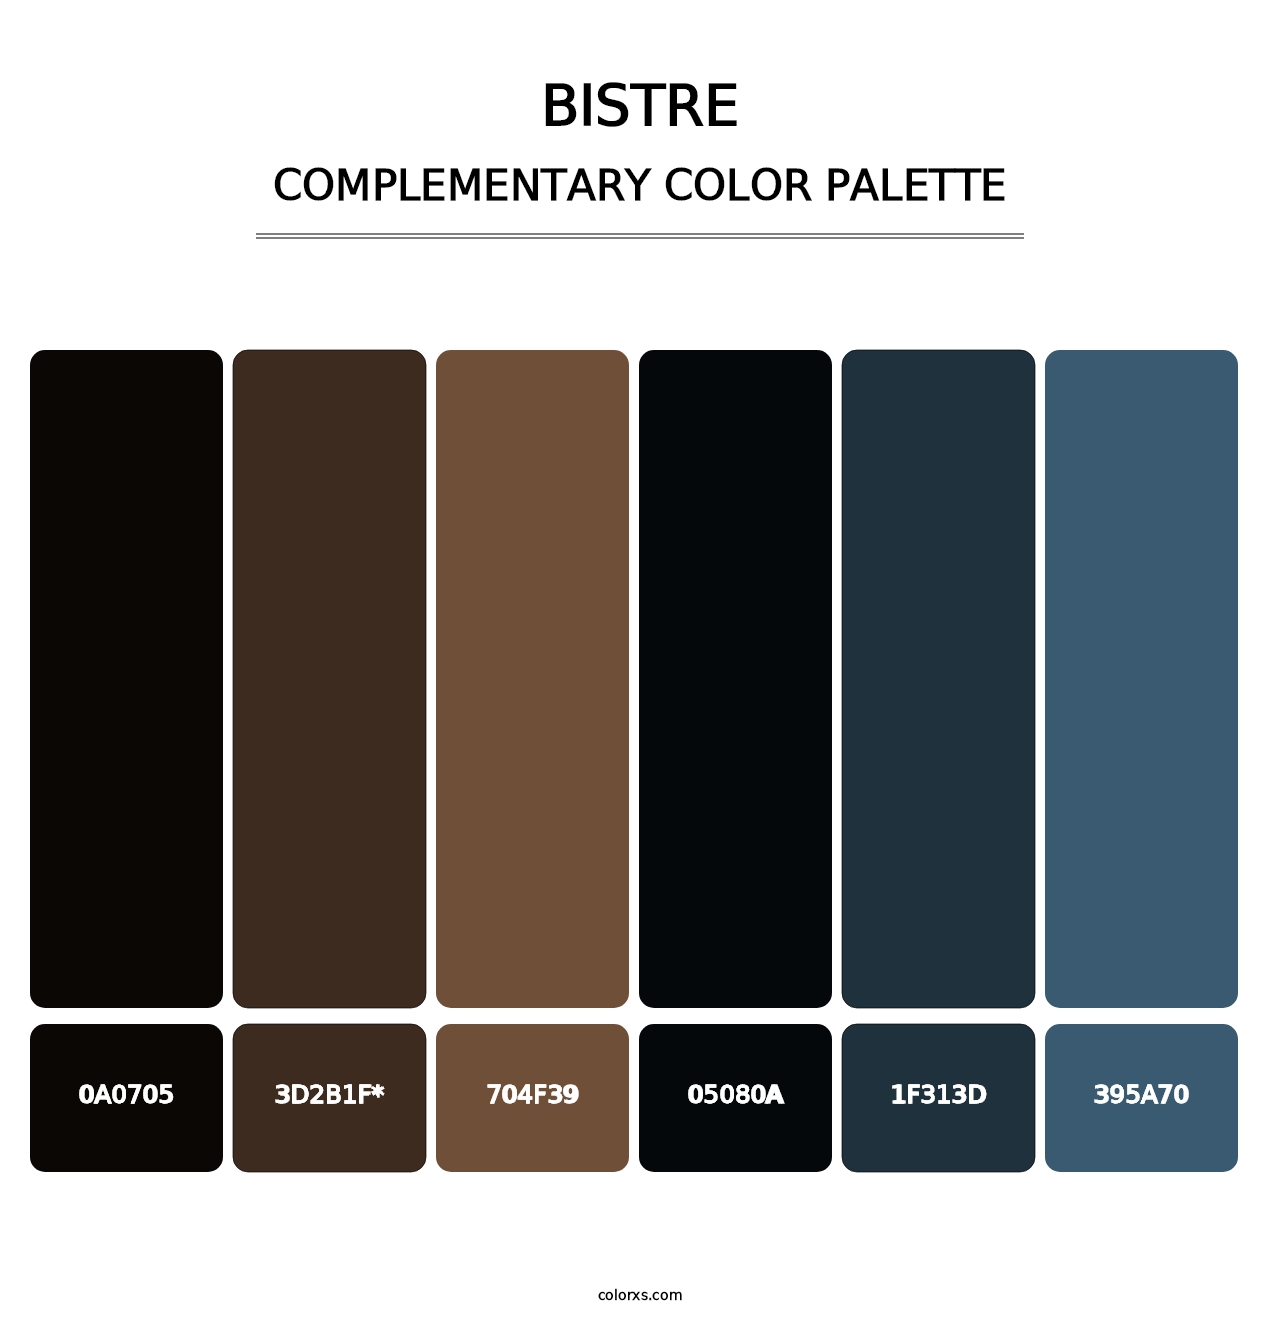 Bistre - Complementary Color Palette